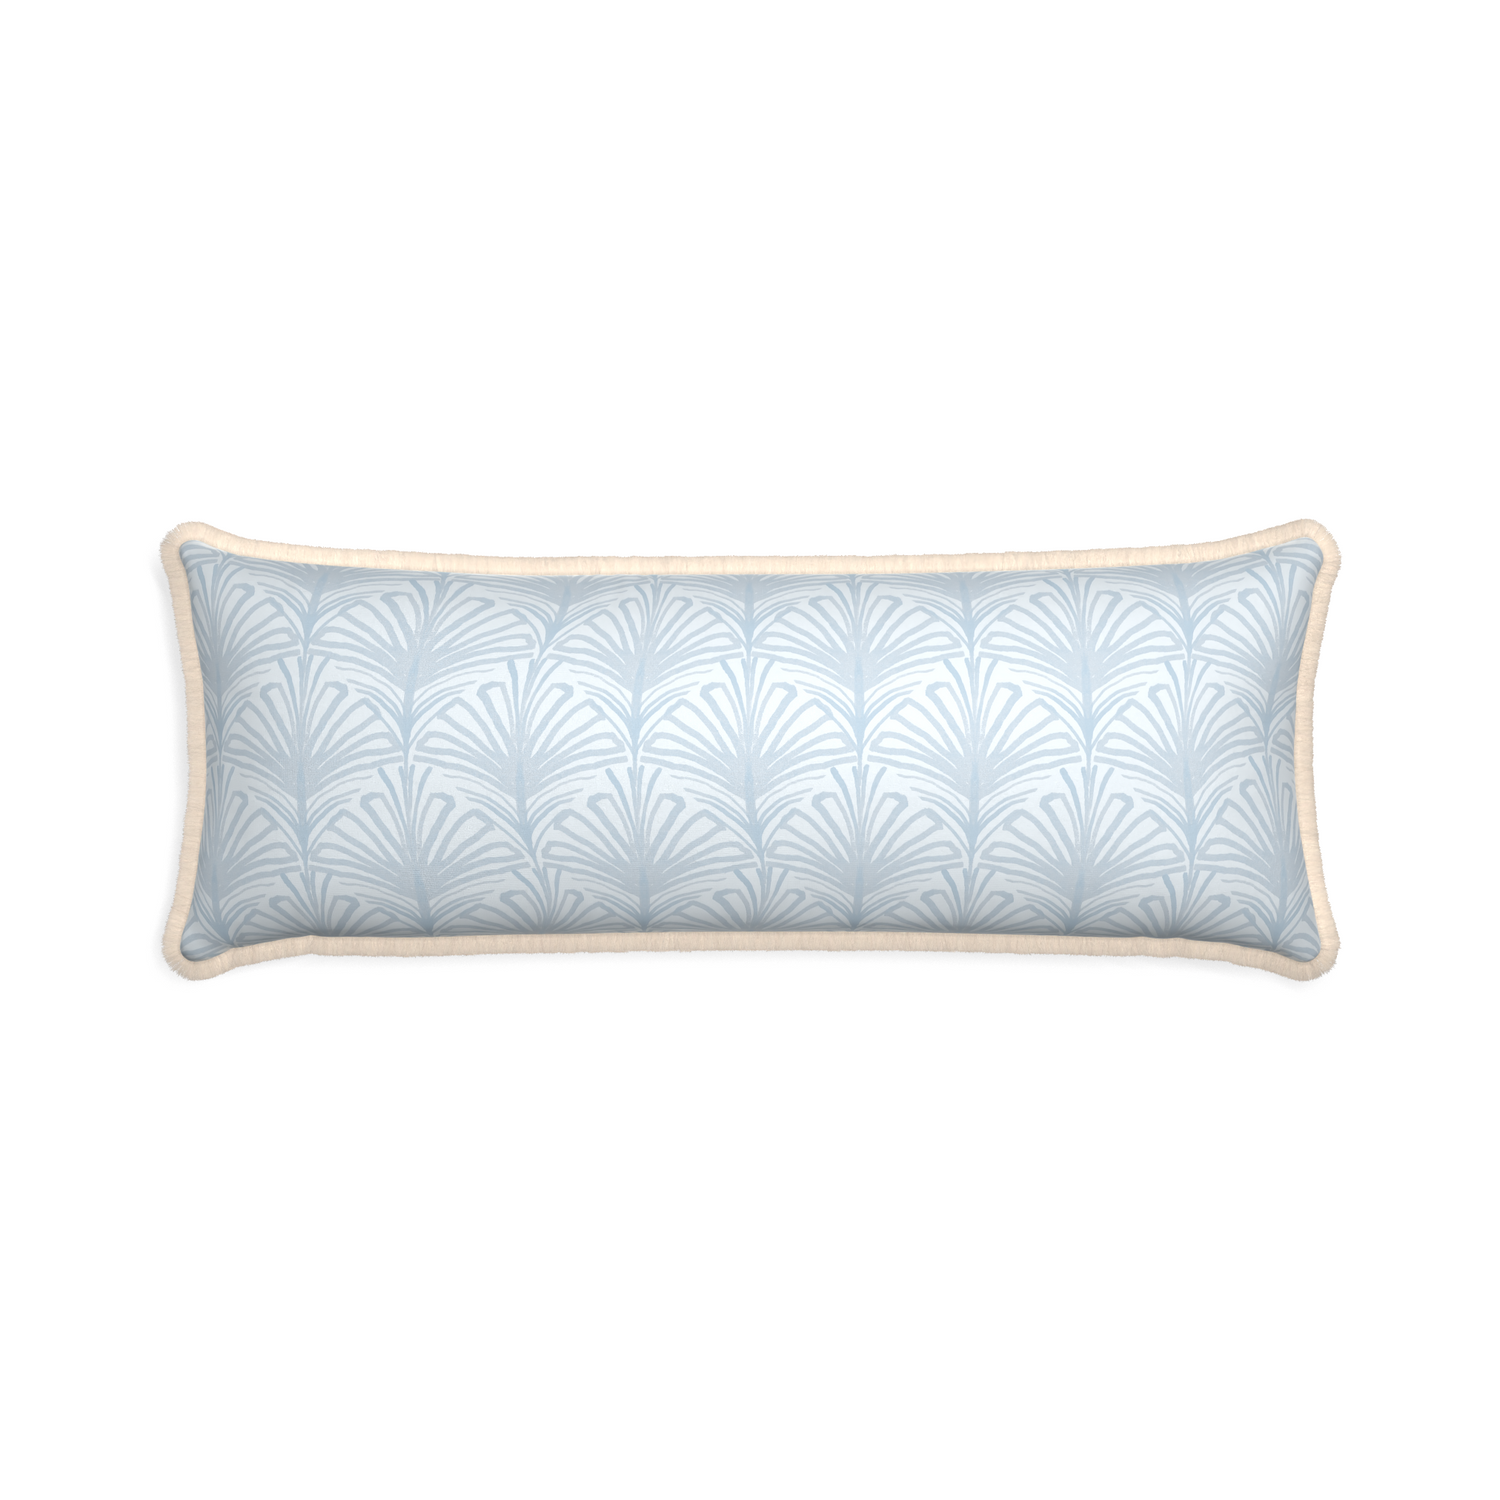 Xl-lumbar suzy sky custom pillow with cream fringe on white background